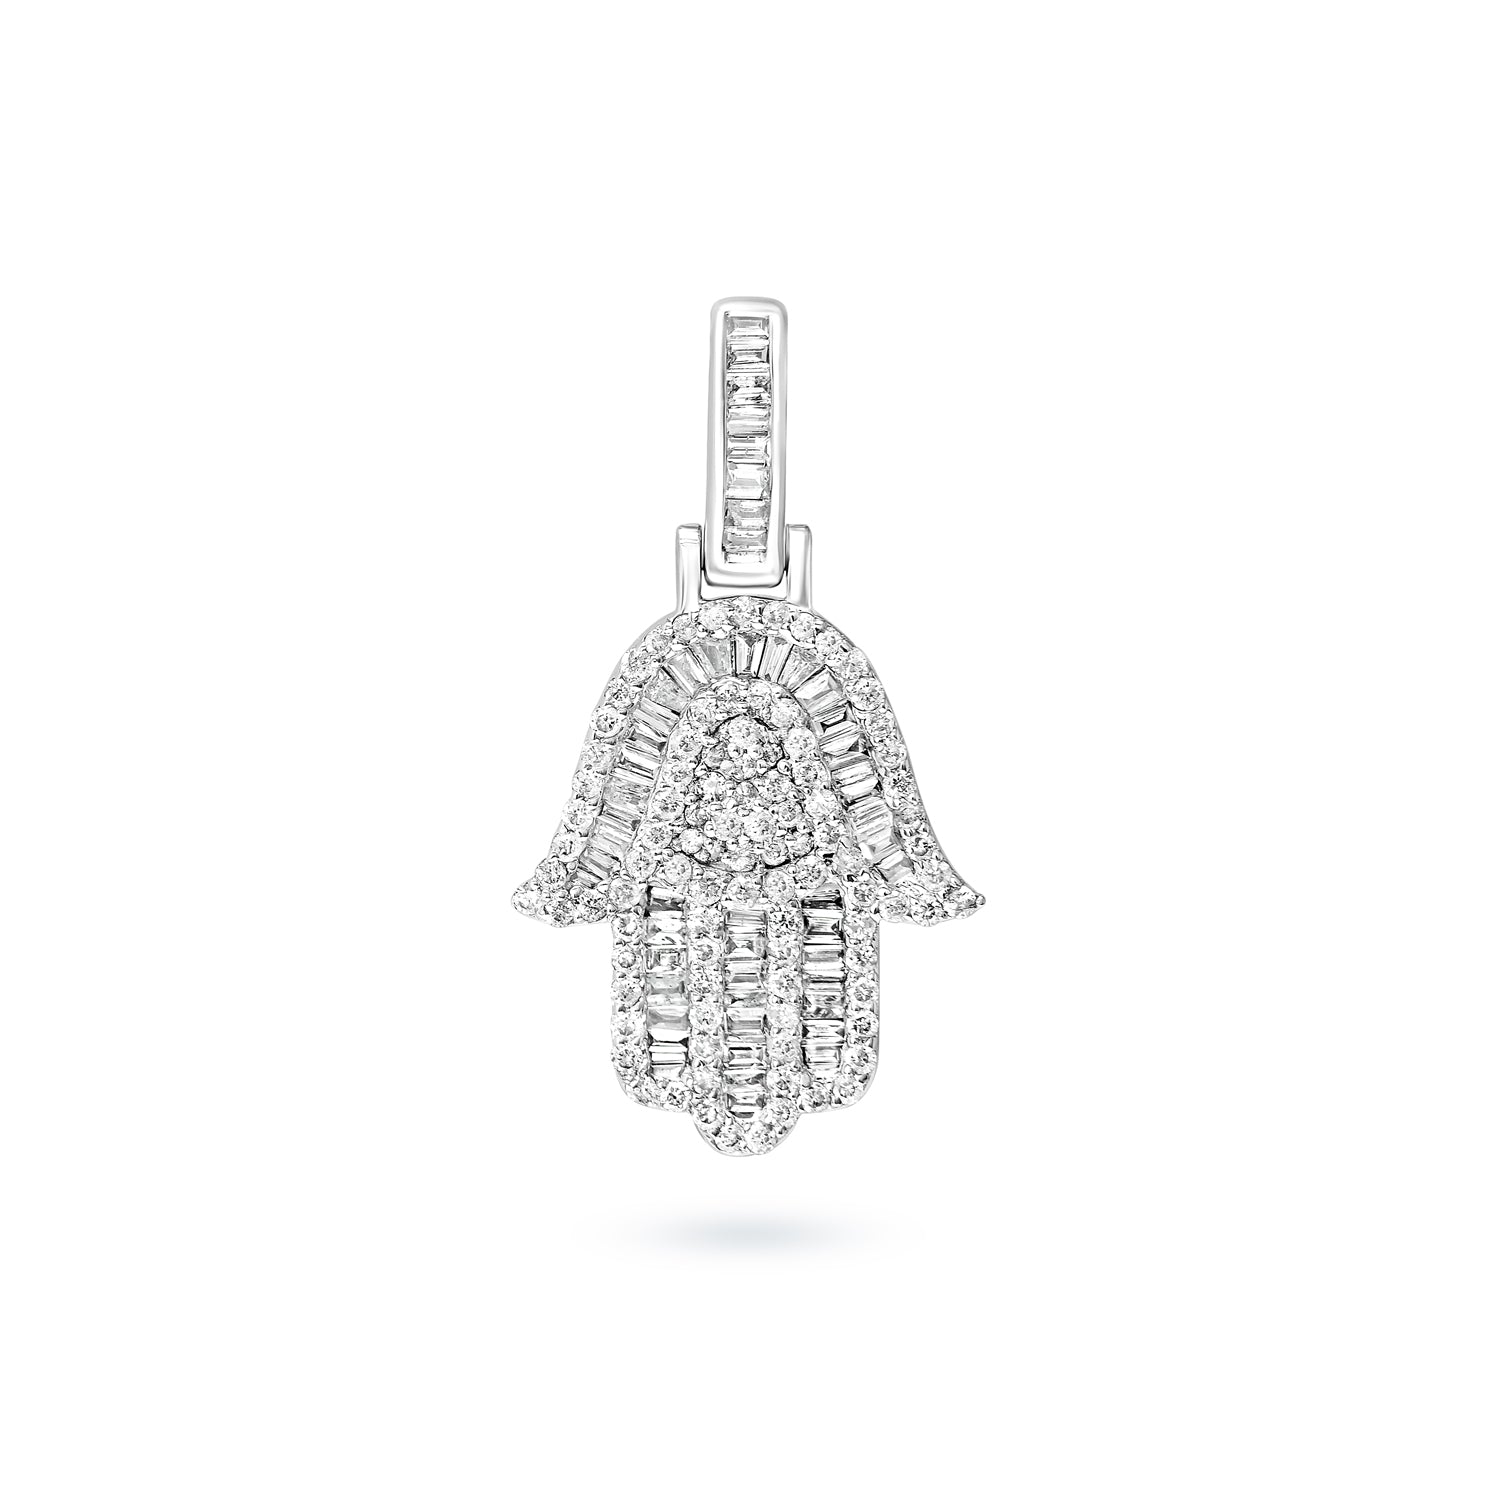 Nekta New York Heiress 44 Carat Round Brilliant Diamond Necklace